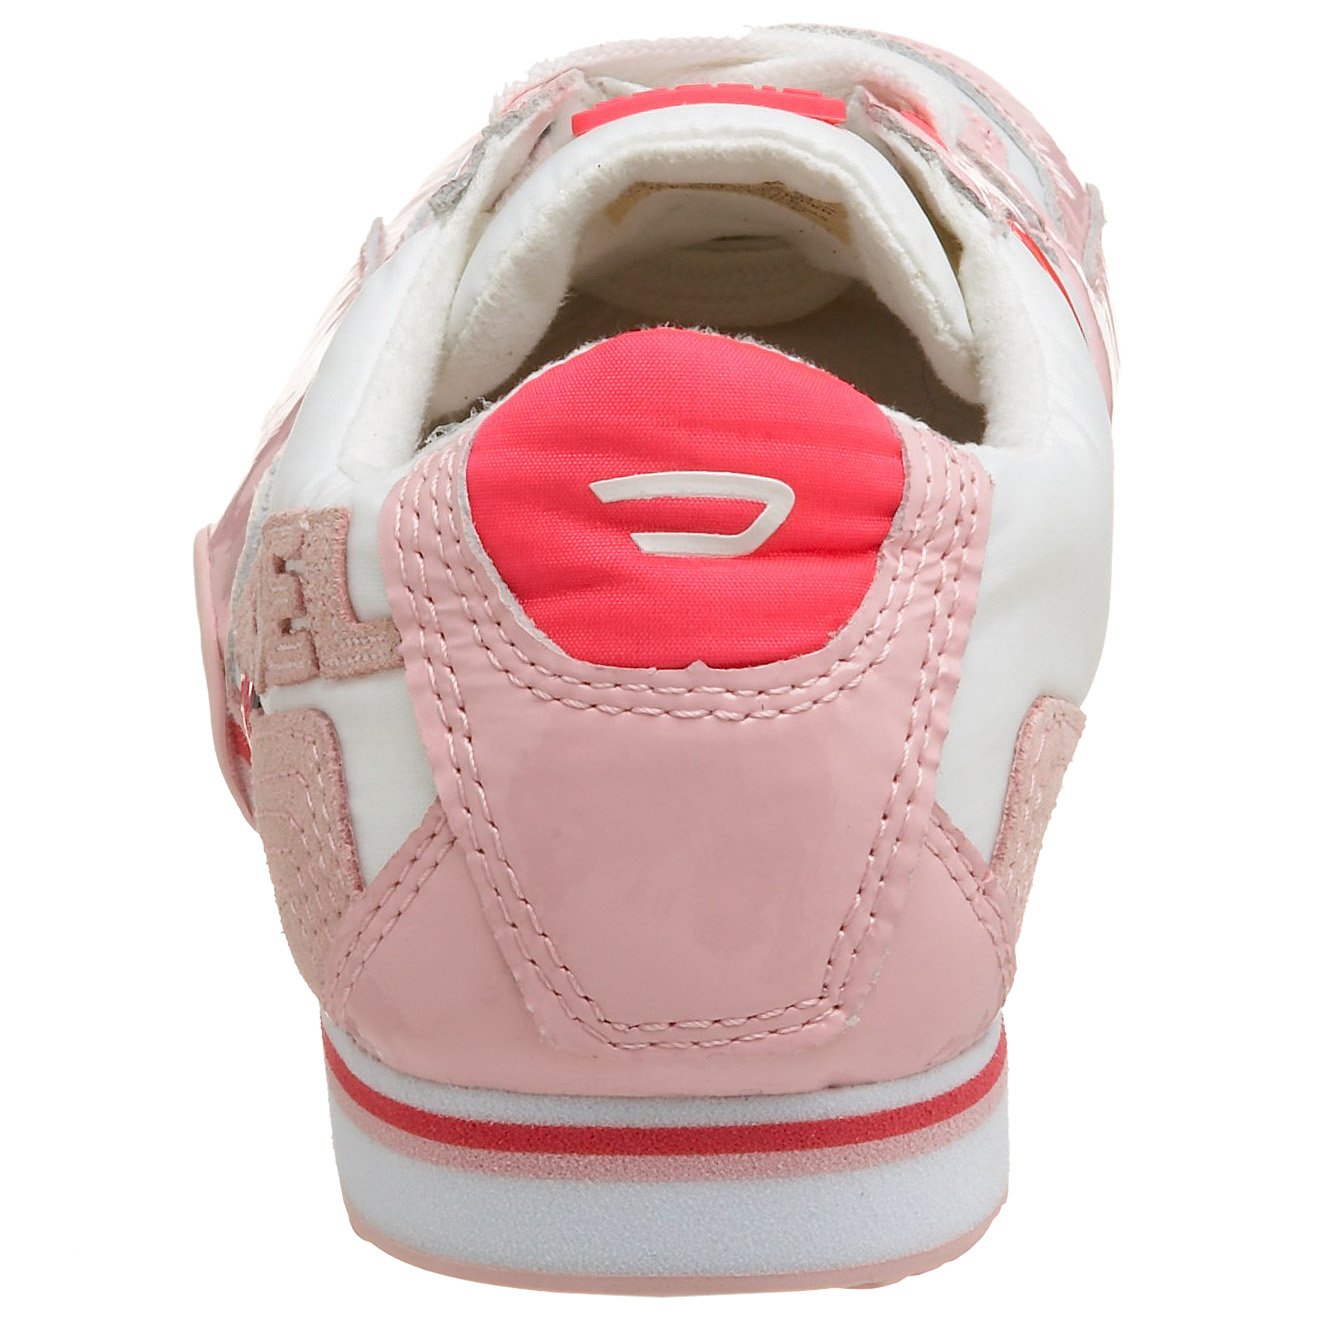 Diesel Little Kid/Big Kid Parabarny Lace-Up Sneaker